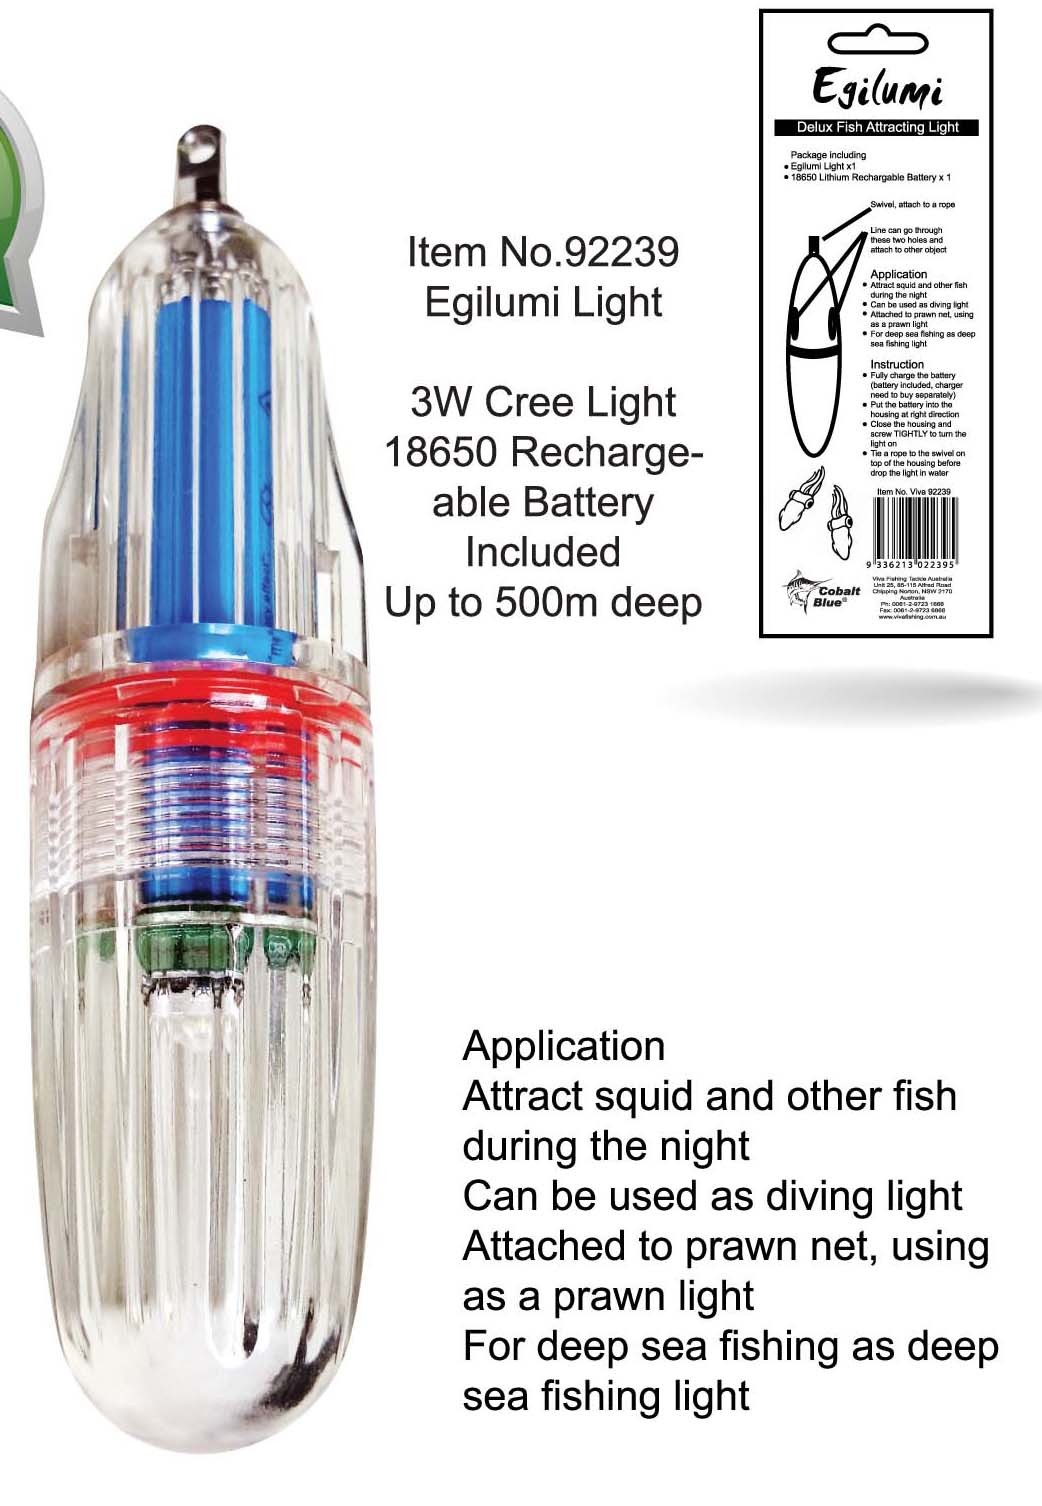 Egilumi Light W/18650 rechargeable battery - 92239 - Viva Fishing Australia